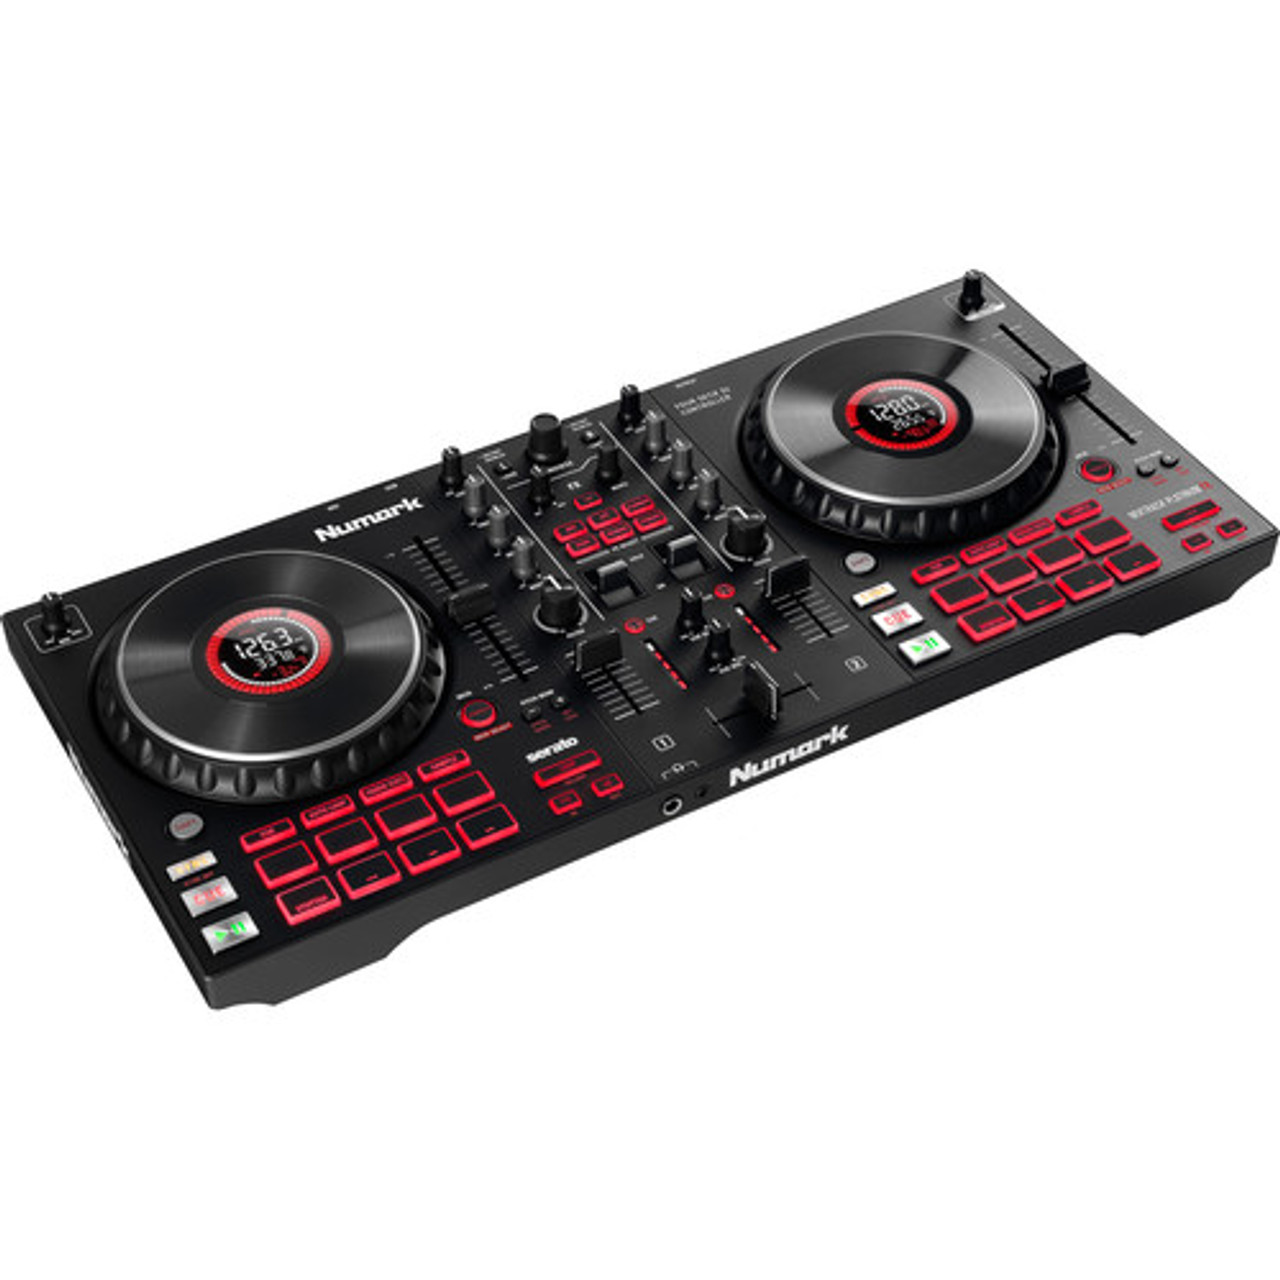 Numark FX 4-Deck Serato DJ Controller with Jog Wheel Displays FX Paddles